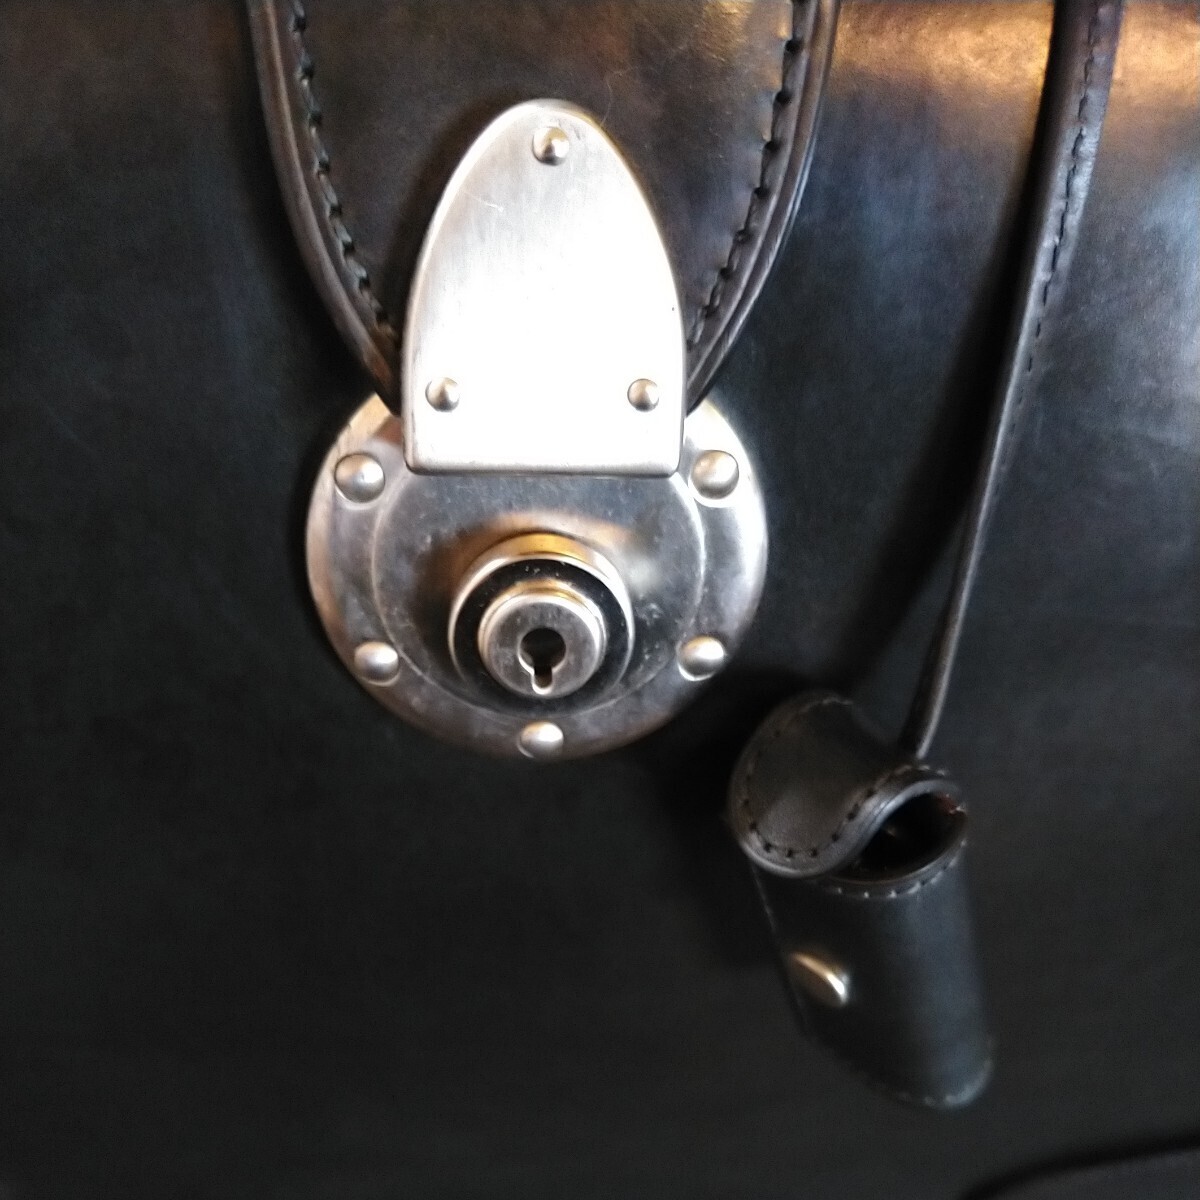  super-beauty goods ten thousand .b ride ru leather Dulles bag 3. inset rare color dark navy 